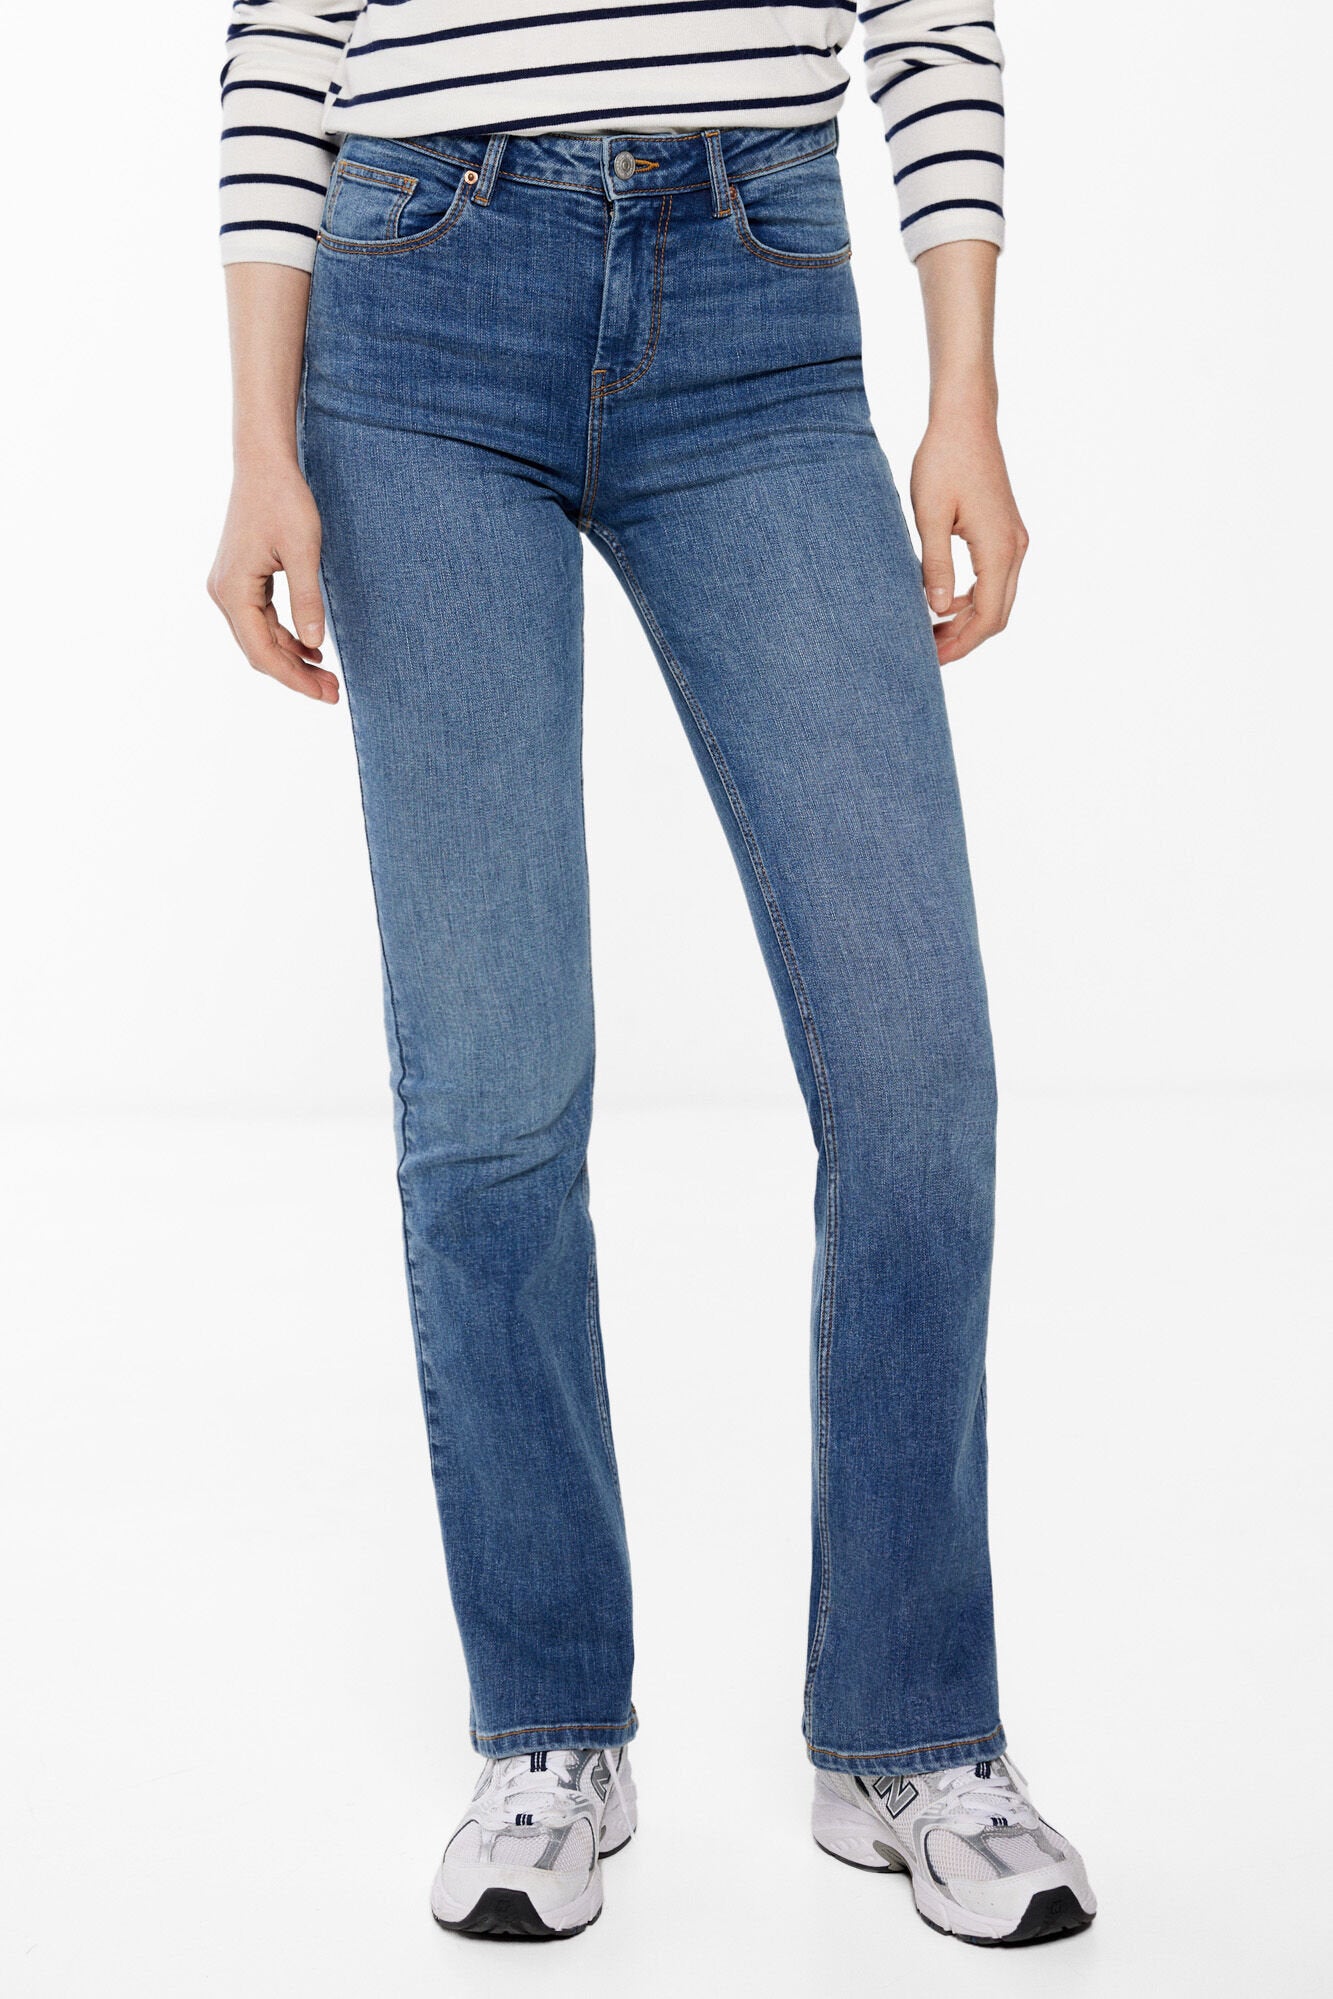 Low Waist Slim Fit Jeans_6827052_14_03